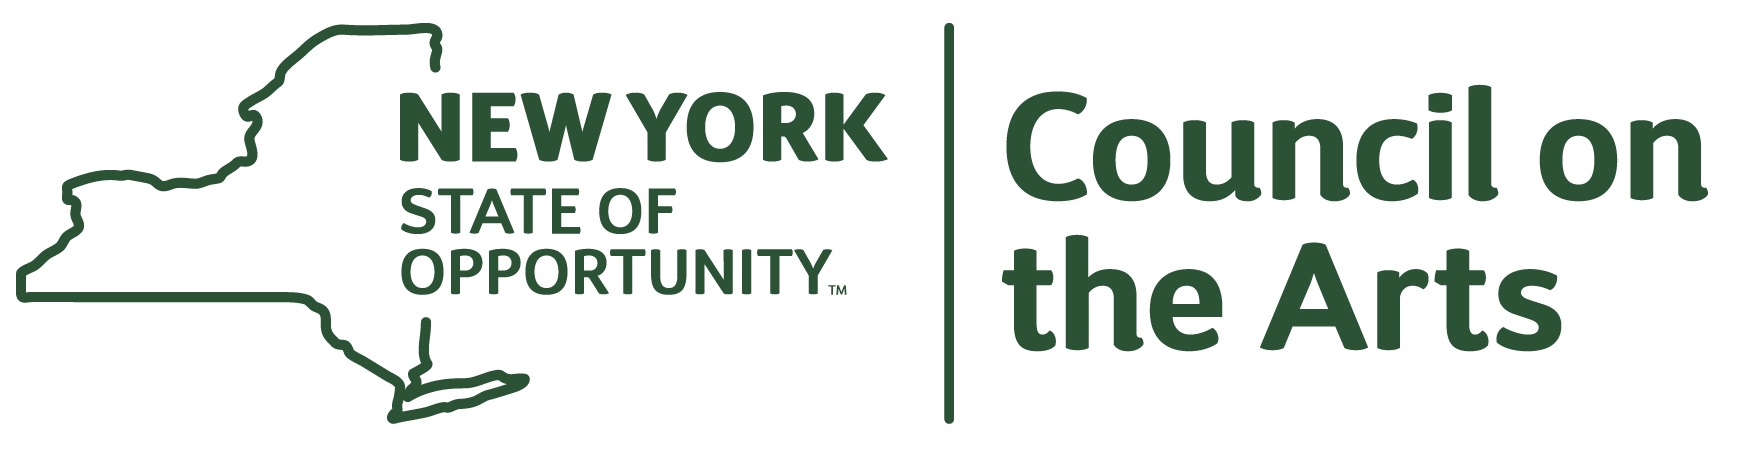 NY State Council of the Arts logo